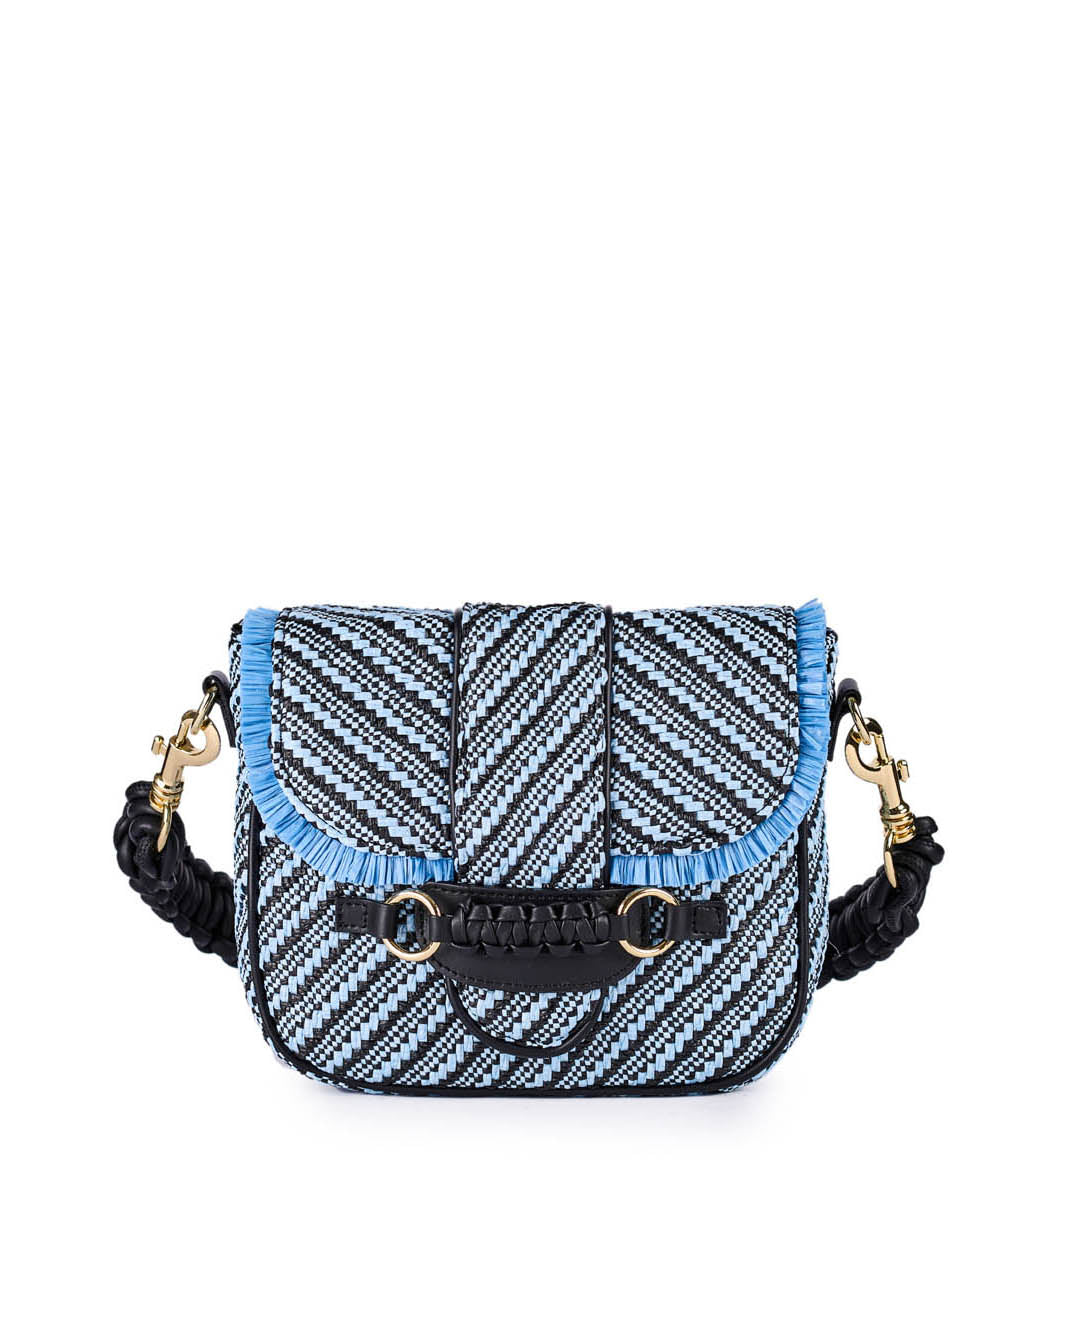 Blue and black woven pattern handbag with fringe detail and adjustable strap